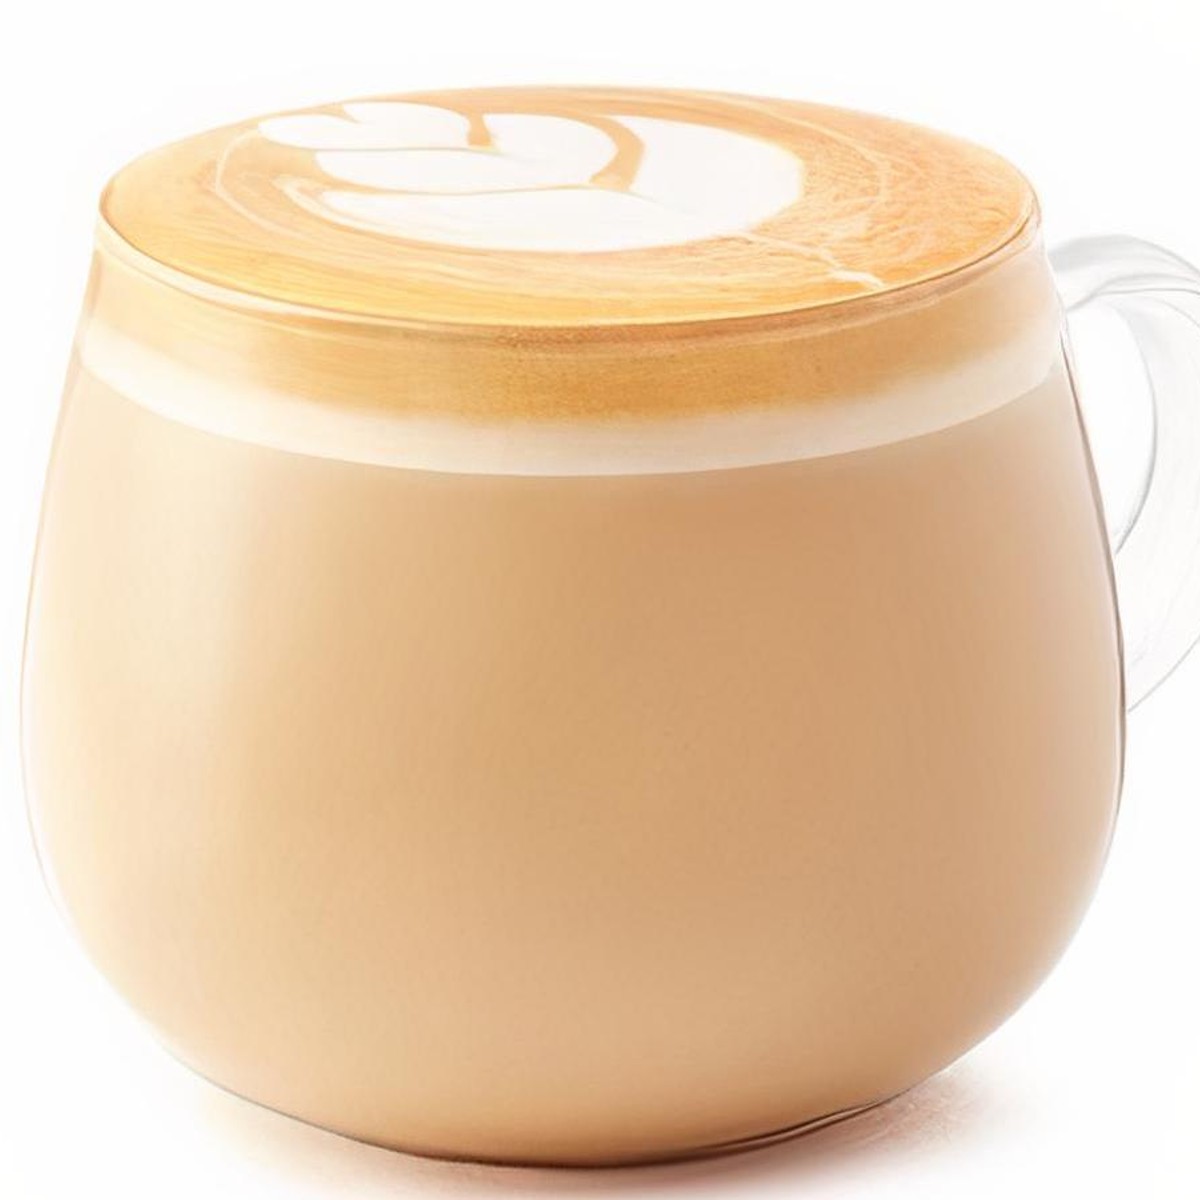 LOOK: Tim Hortons adds new Matcha Latte to menu